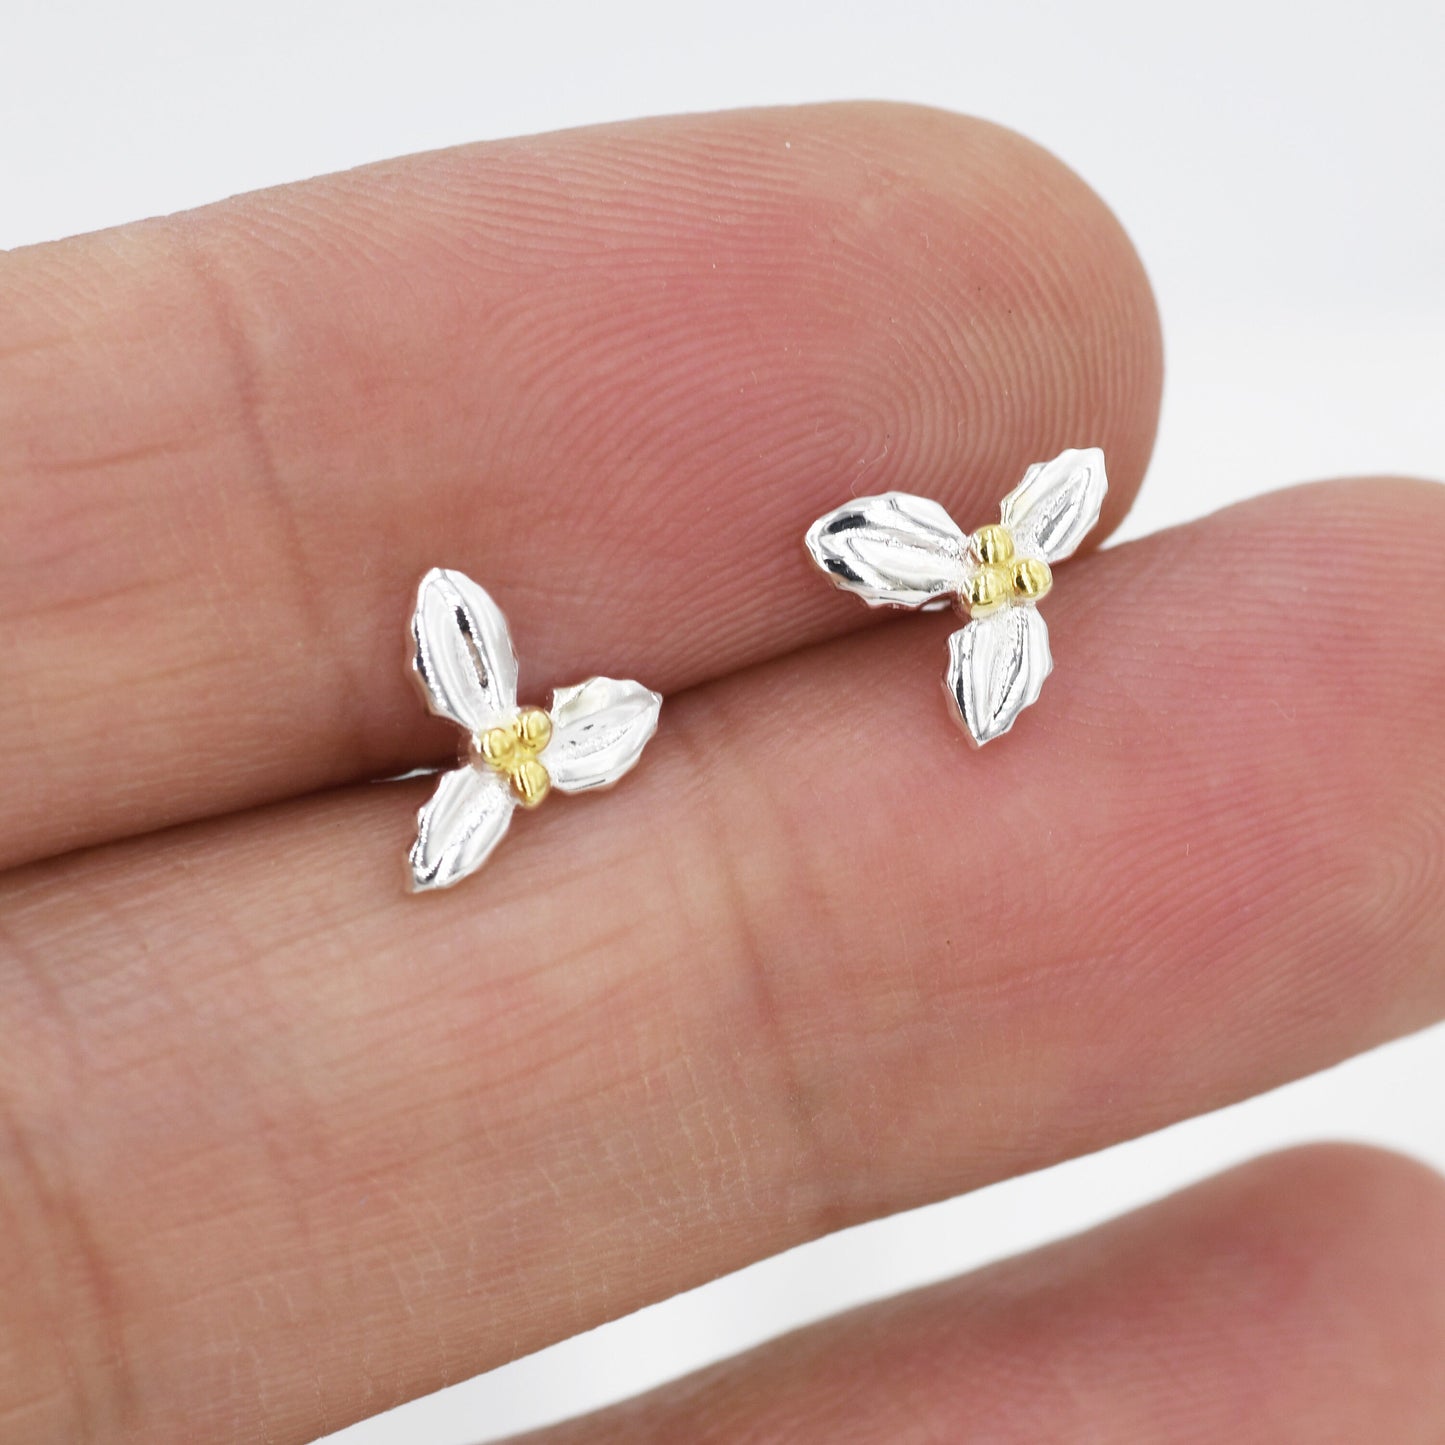 Holly Stud Earrings in Sterling Silver, Botanical Jewellery, Flower Earrings, December Birth Flower, Christmas Earrings